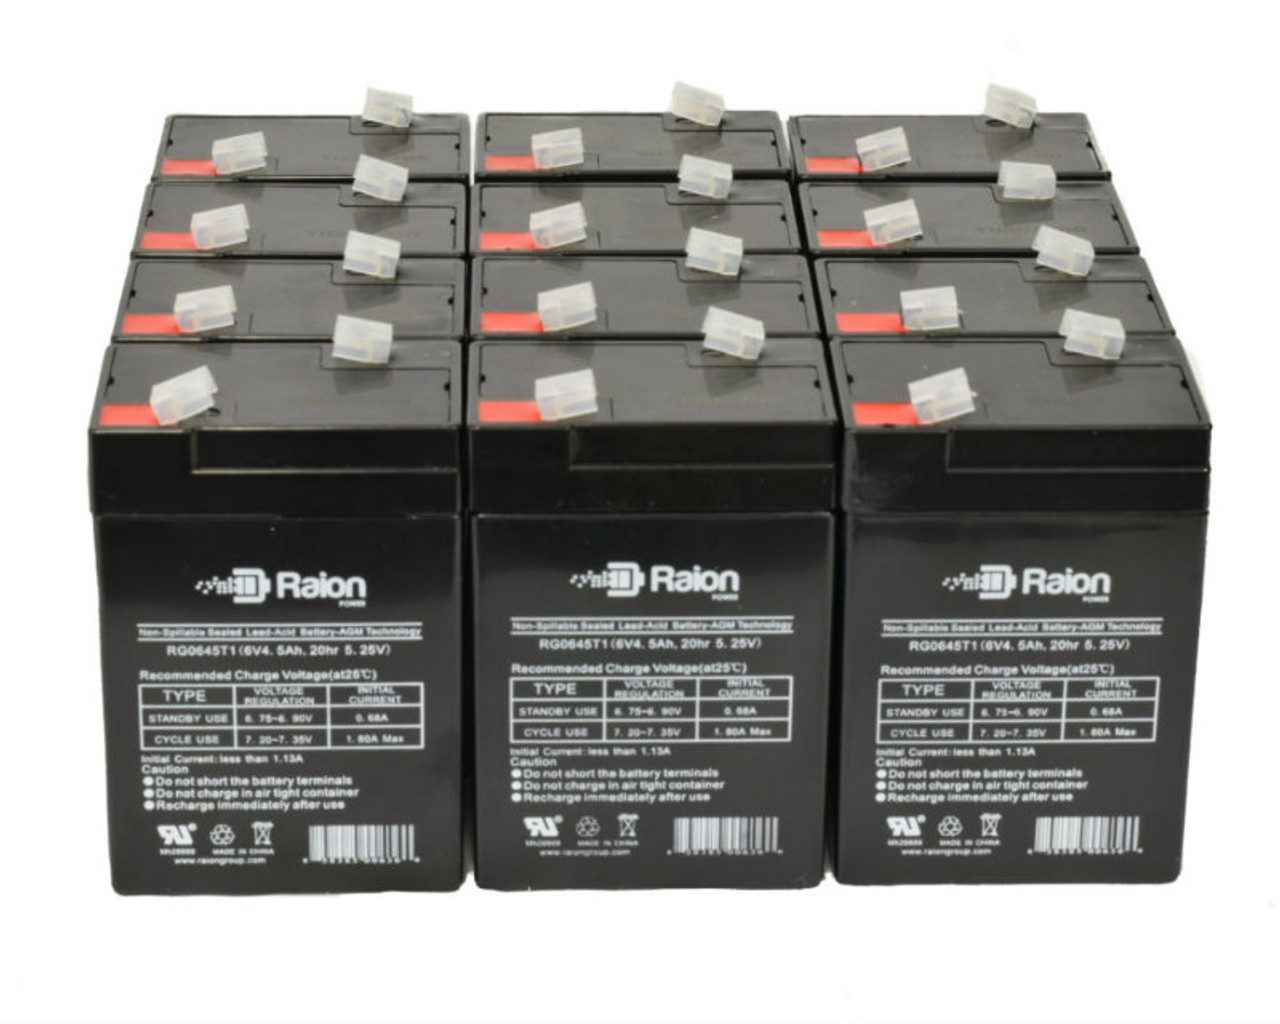 Raion Power 6V 4.5Ah Replacement Emergency Light Battery for Sonnenschein A506/4.5K - 12 Pack